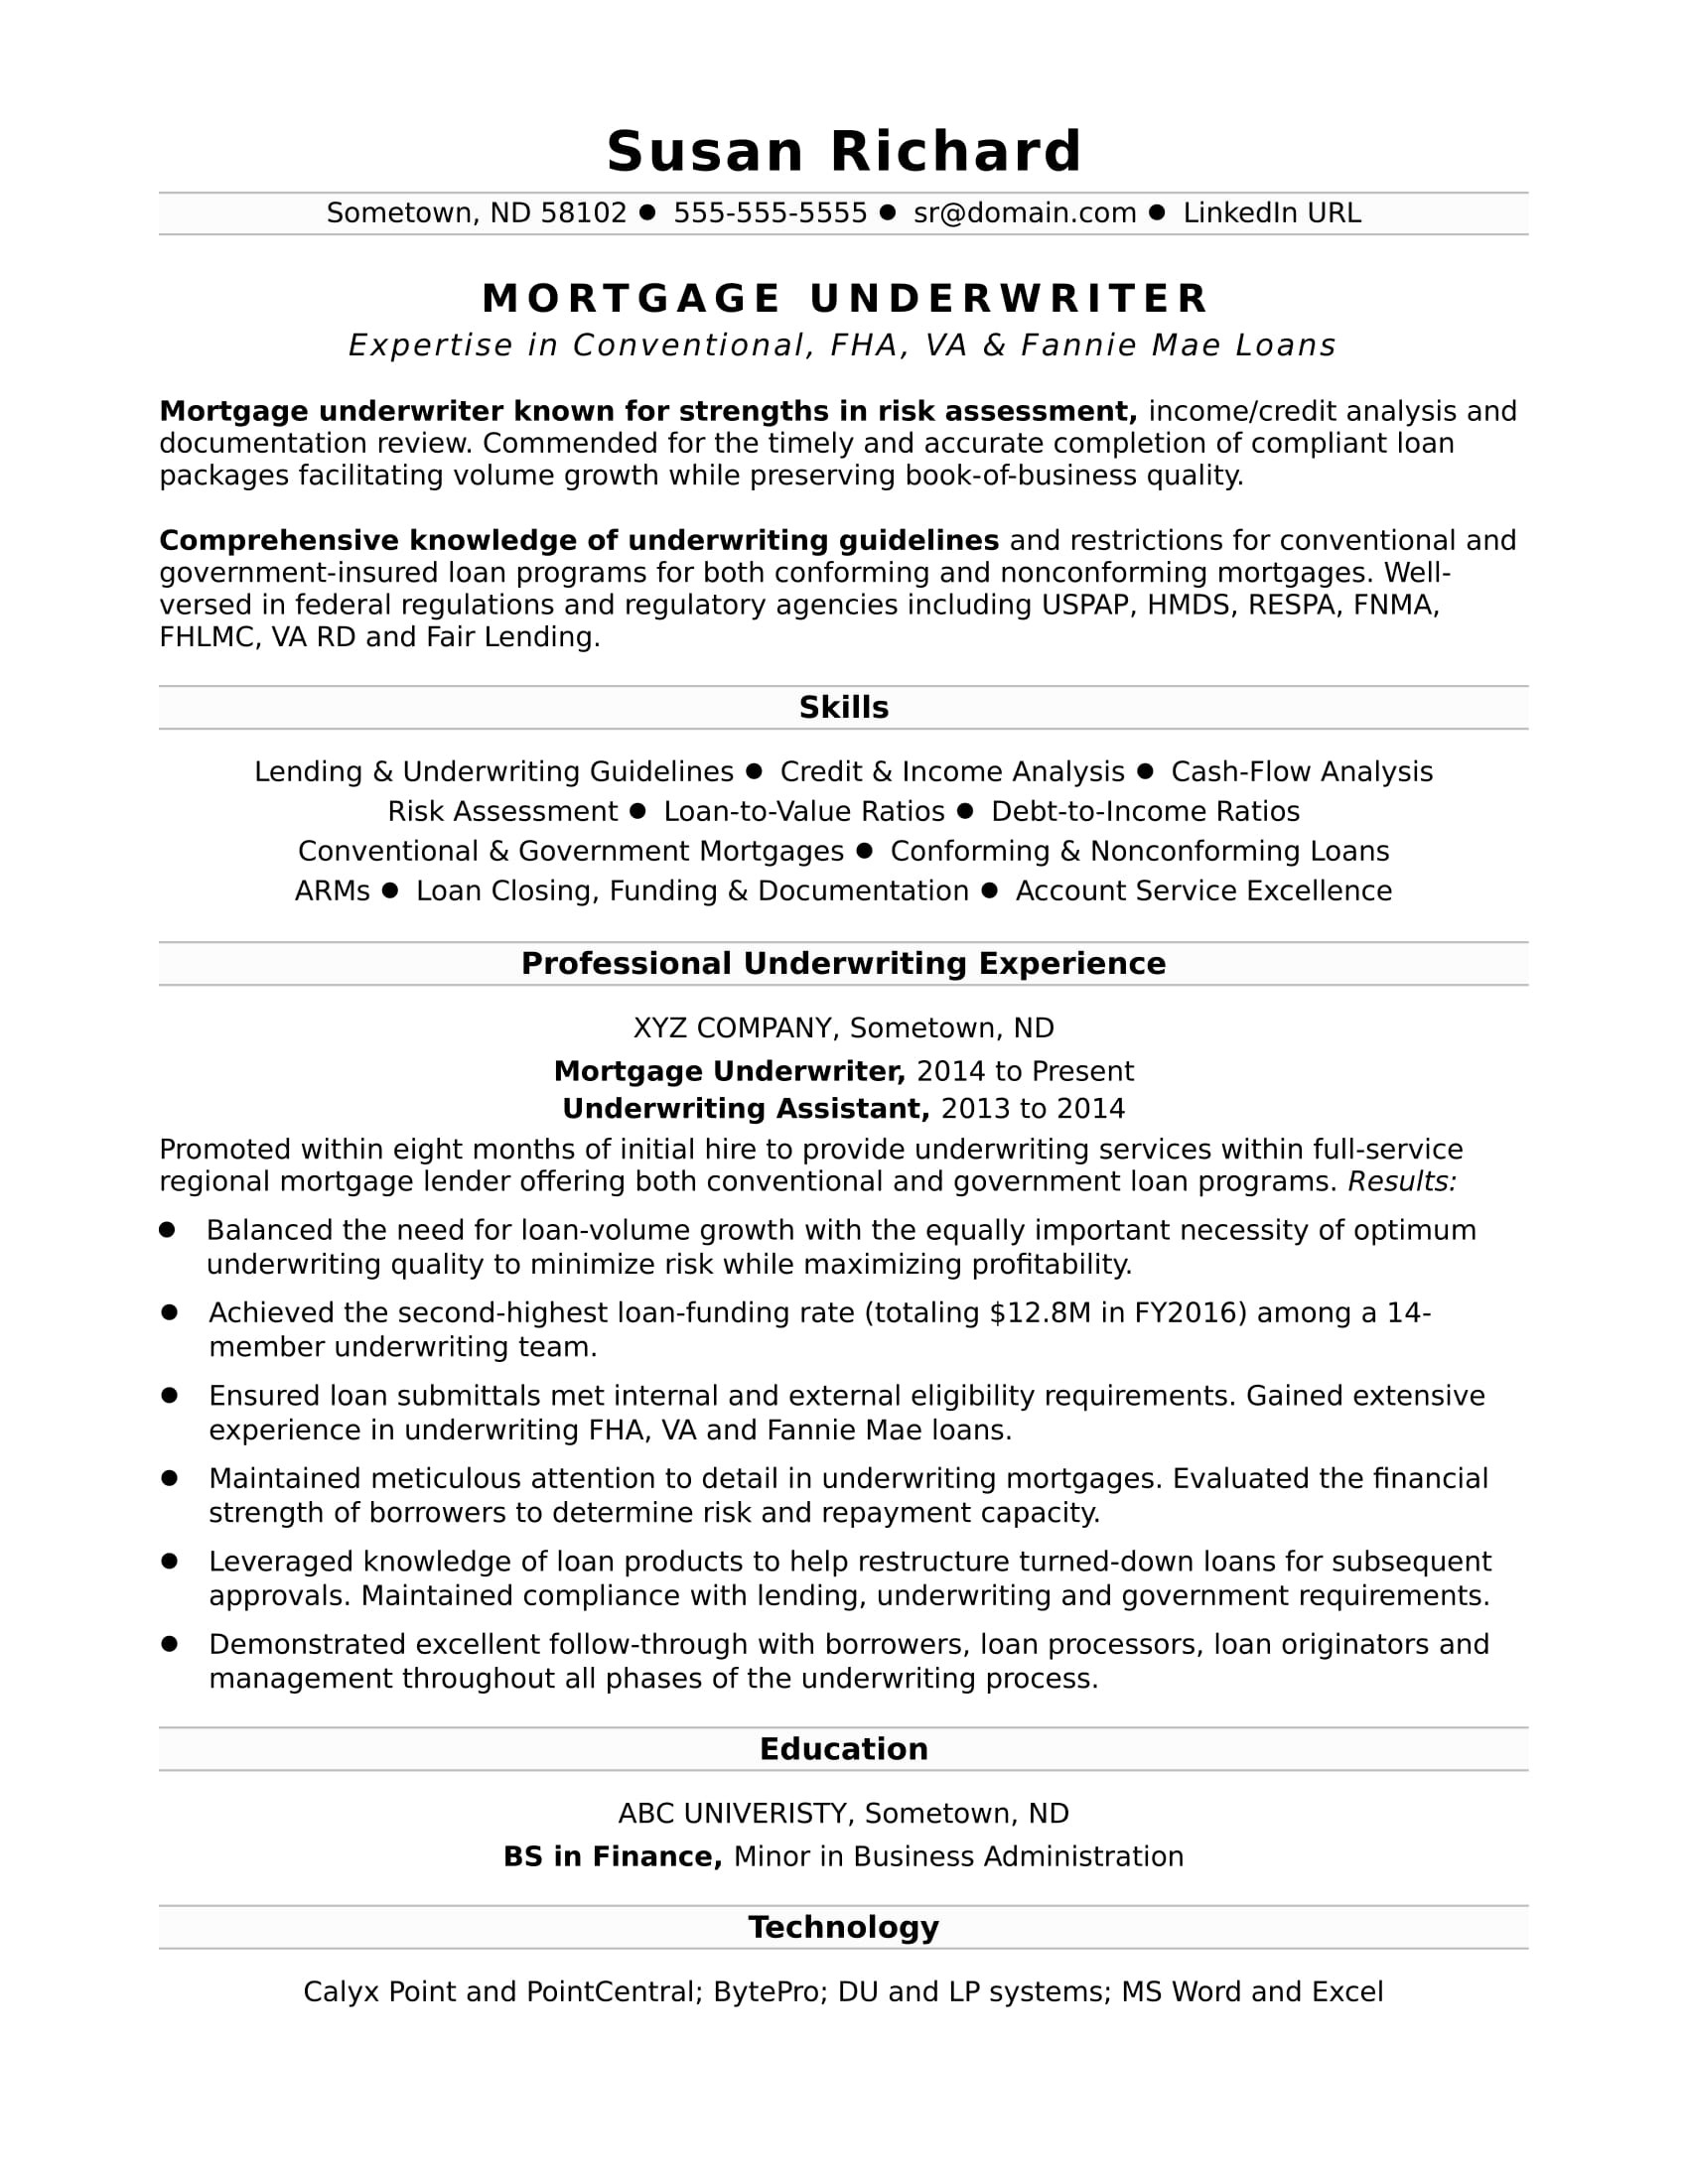 Business Analyst Mortage Resume Sample In Linkedin Mortgage Underwriter Resume Sample Monster.com